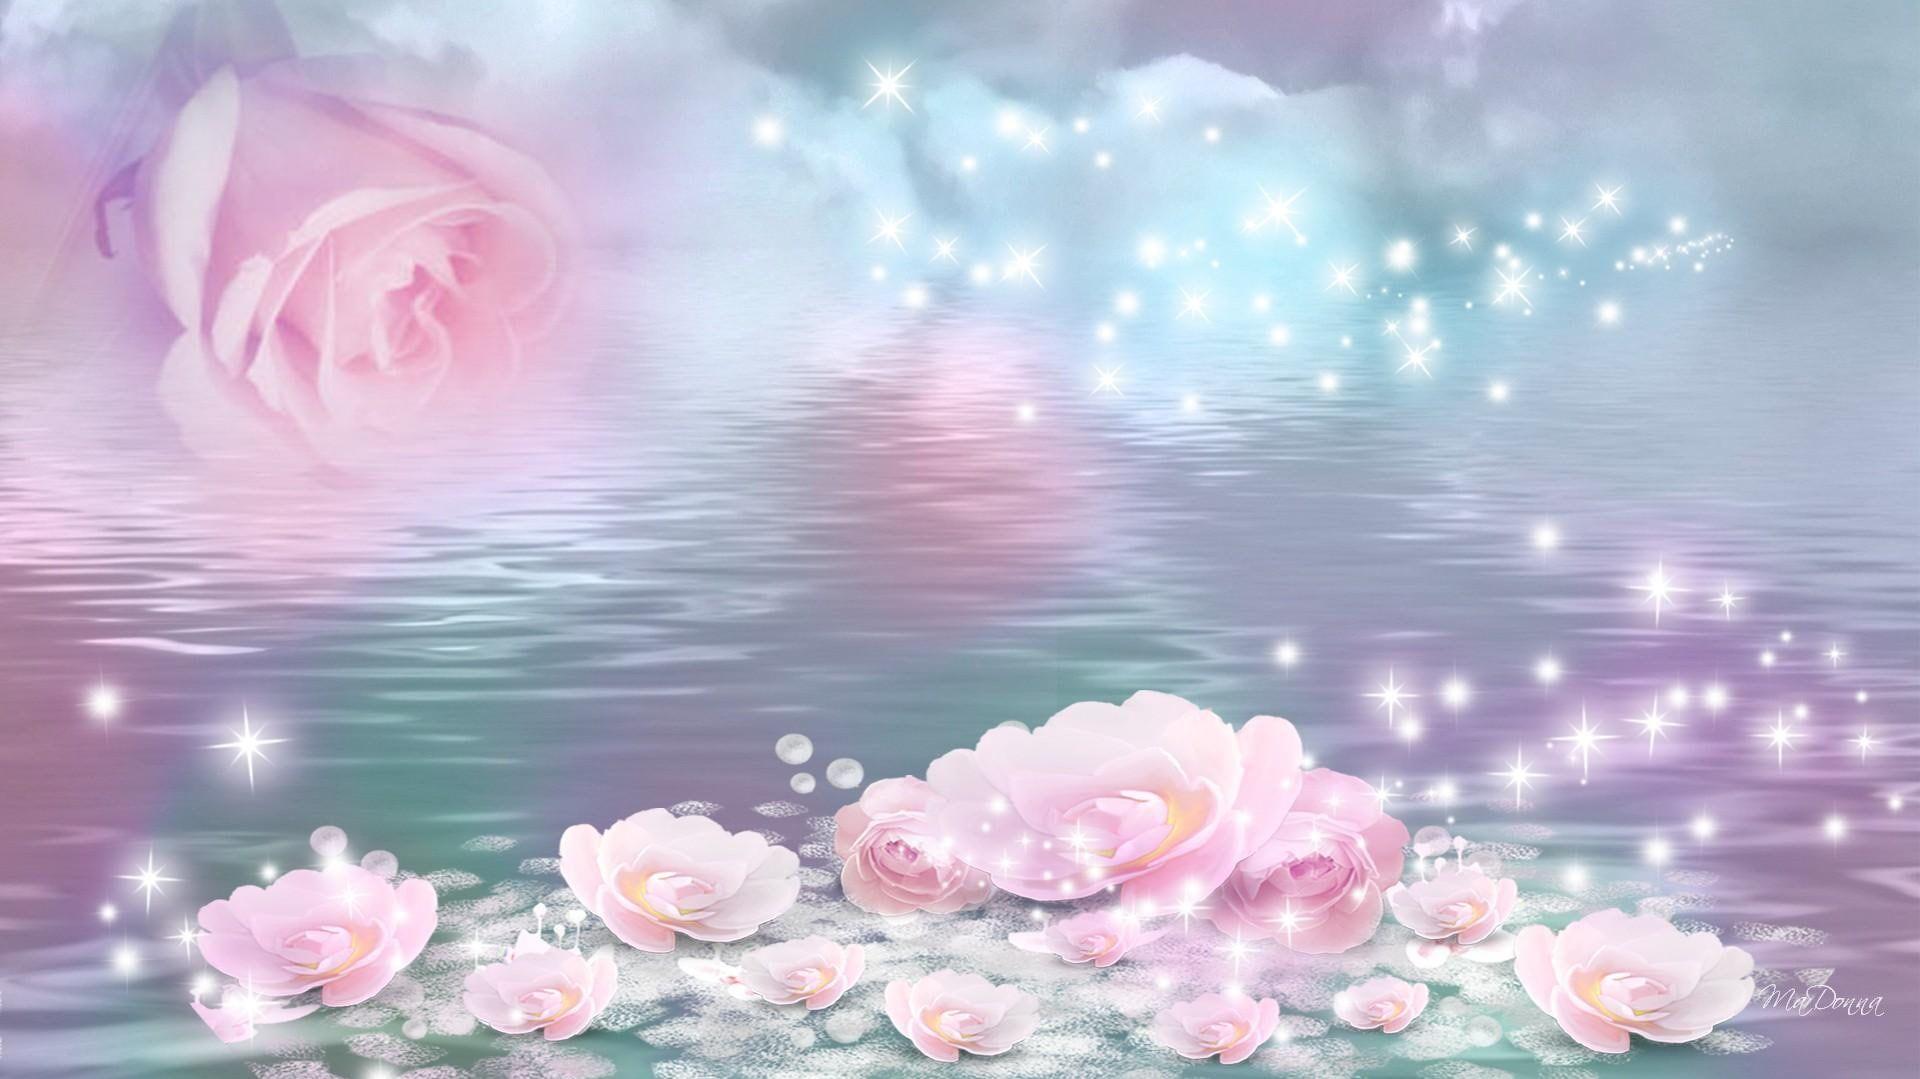 Roses Float wallpaper stars lake sparkle water mirage